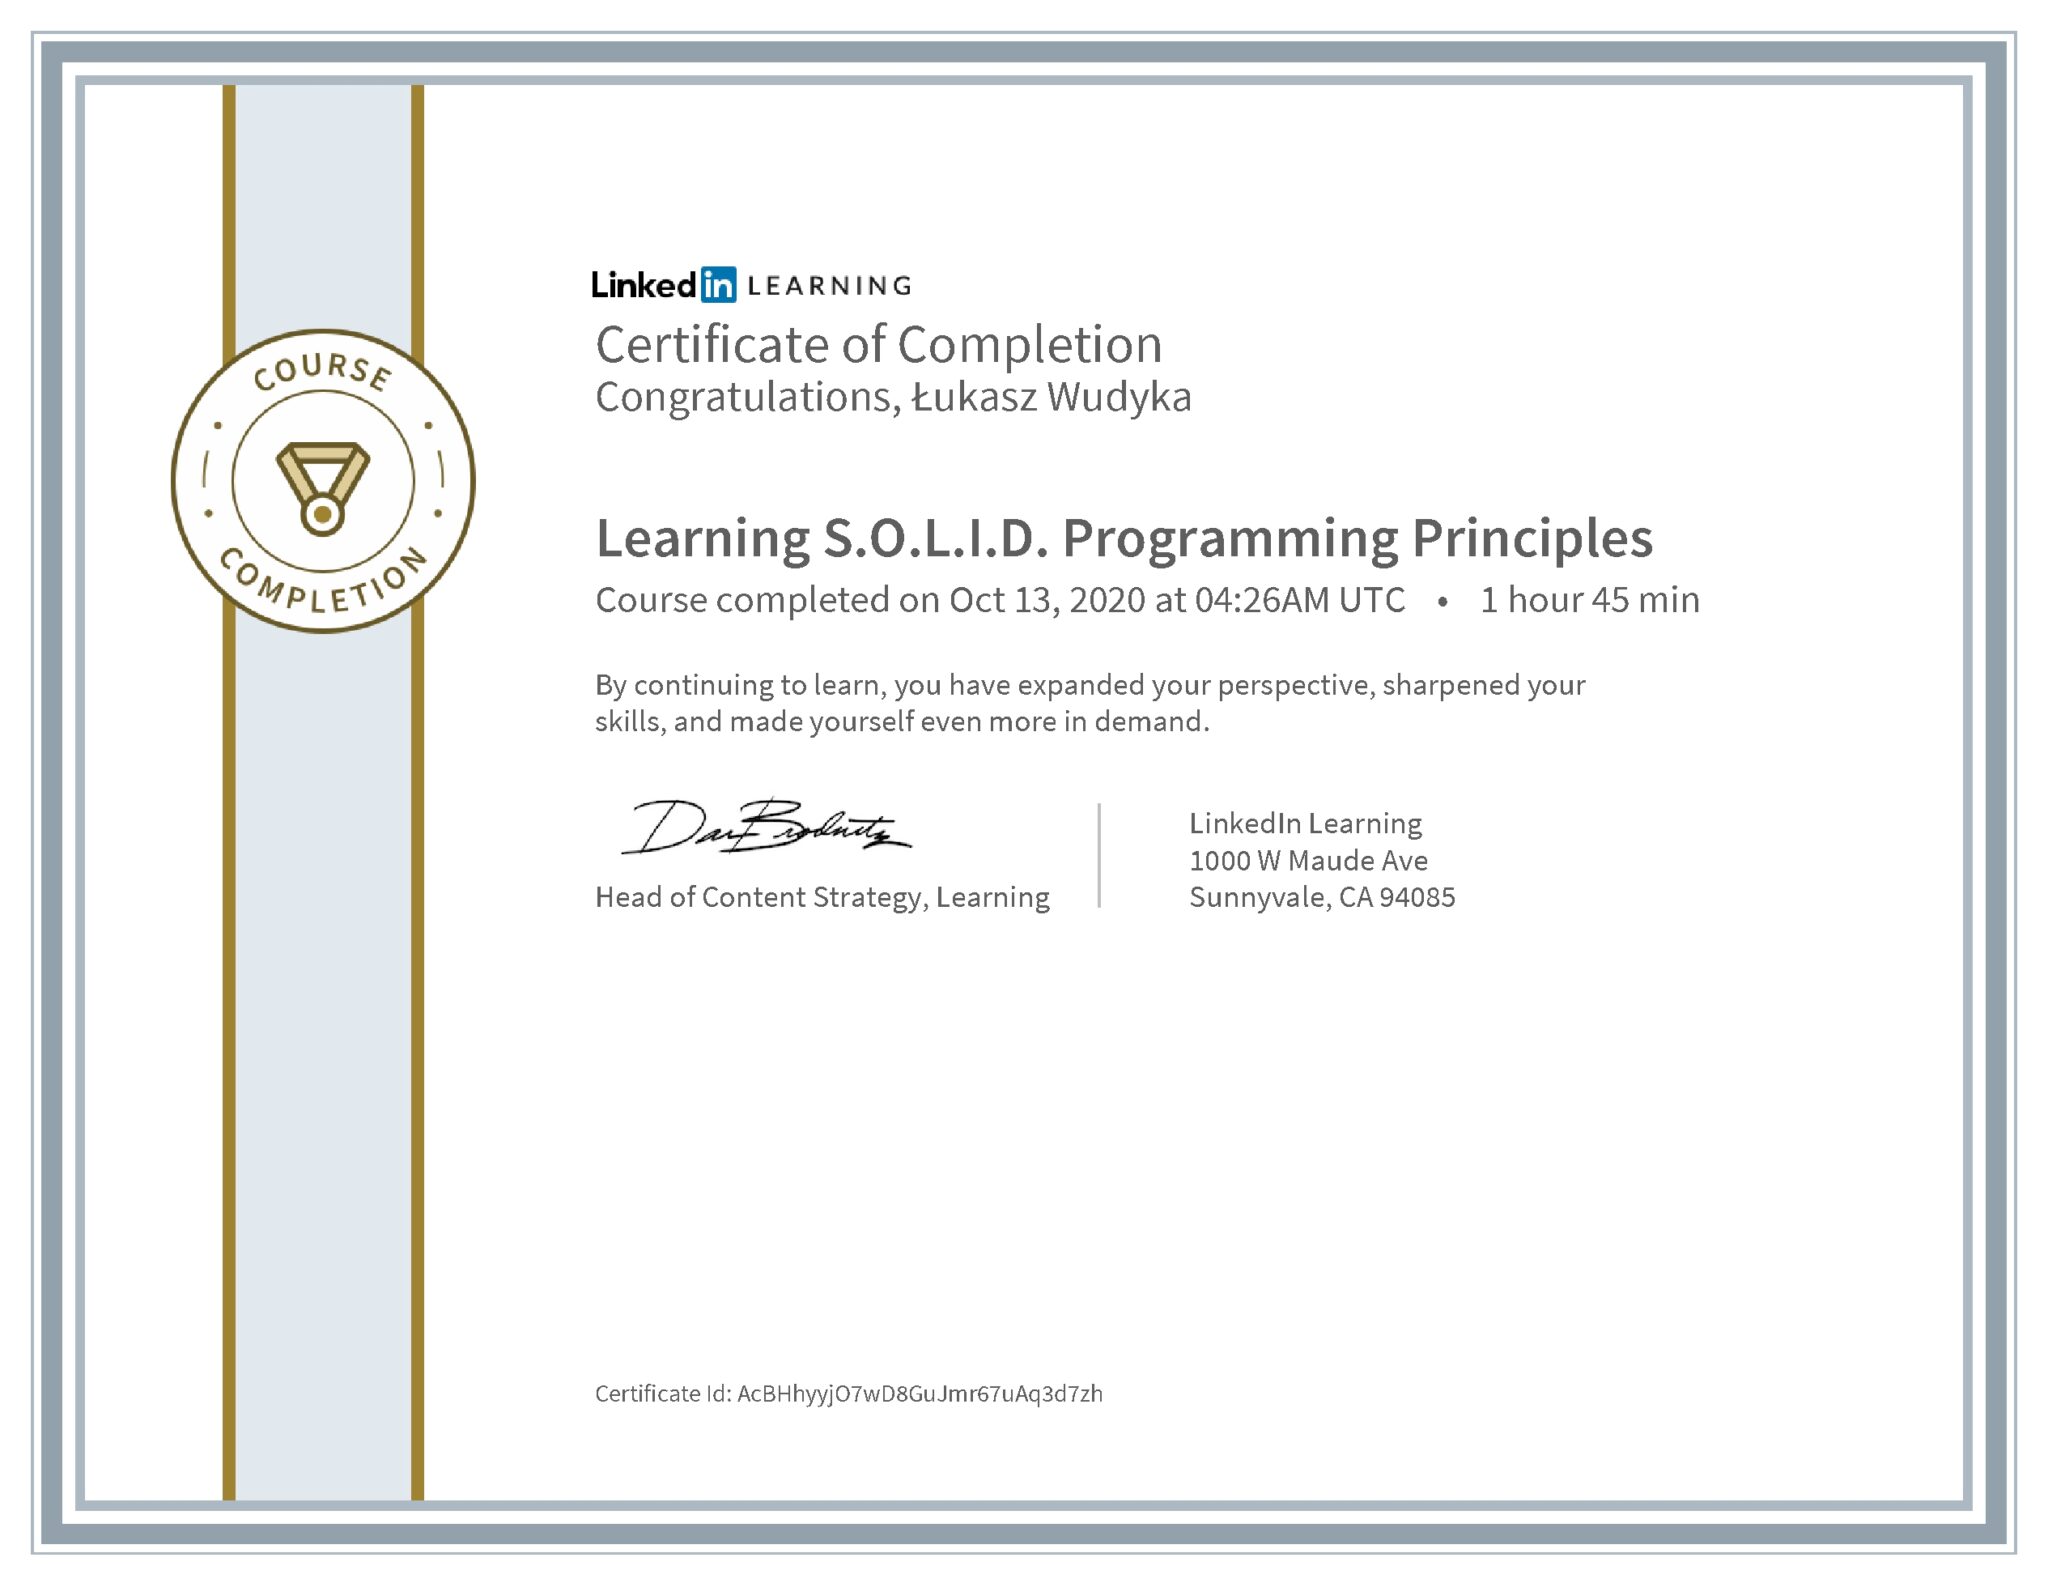 Łukasz Wudyka certyfikat LinkedIn Learning S.O.L.I.D. Programming Principles